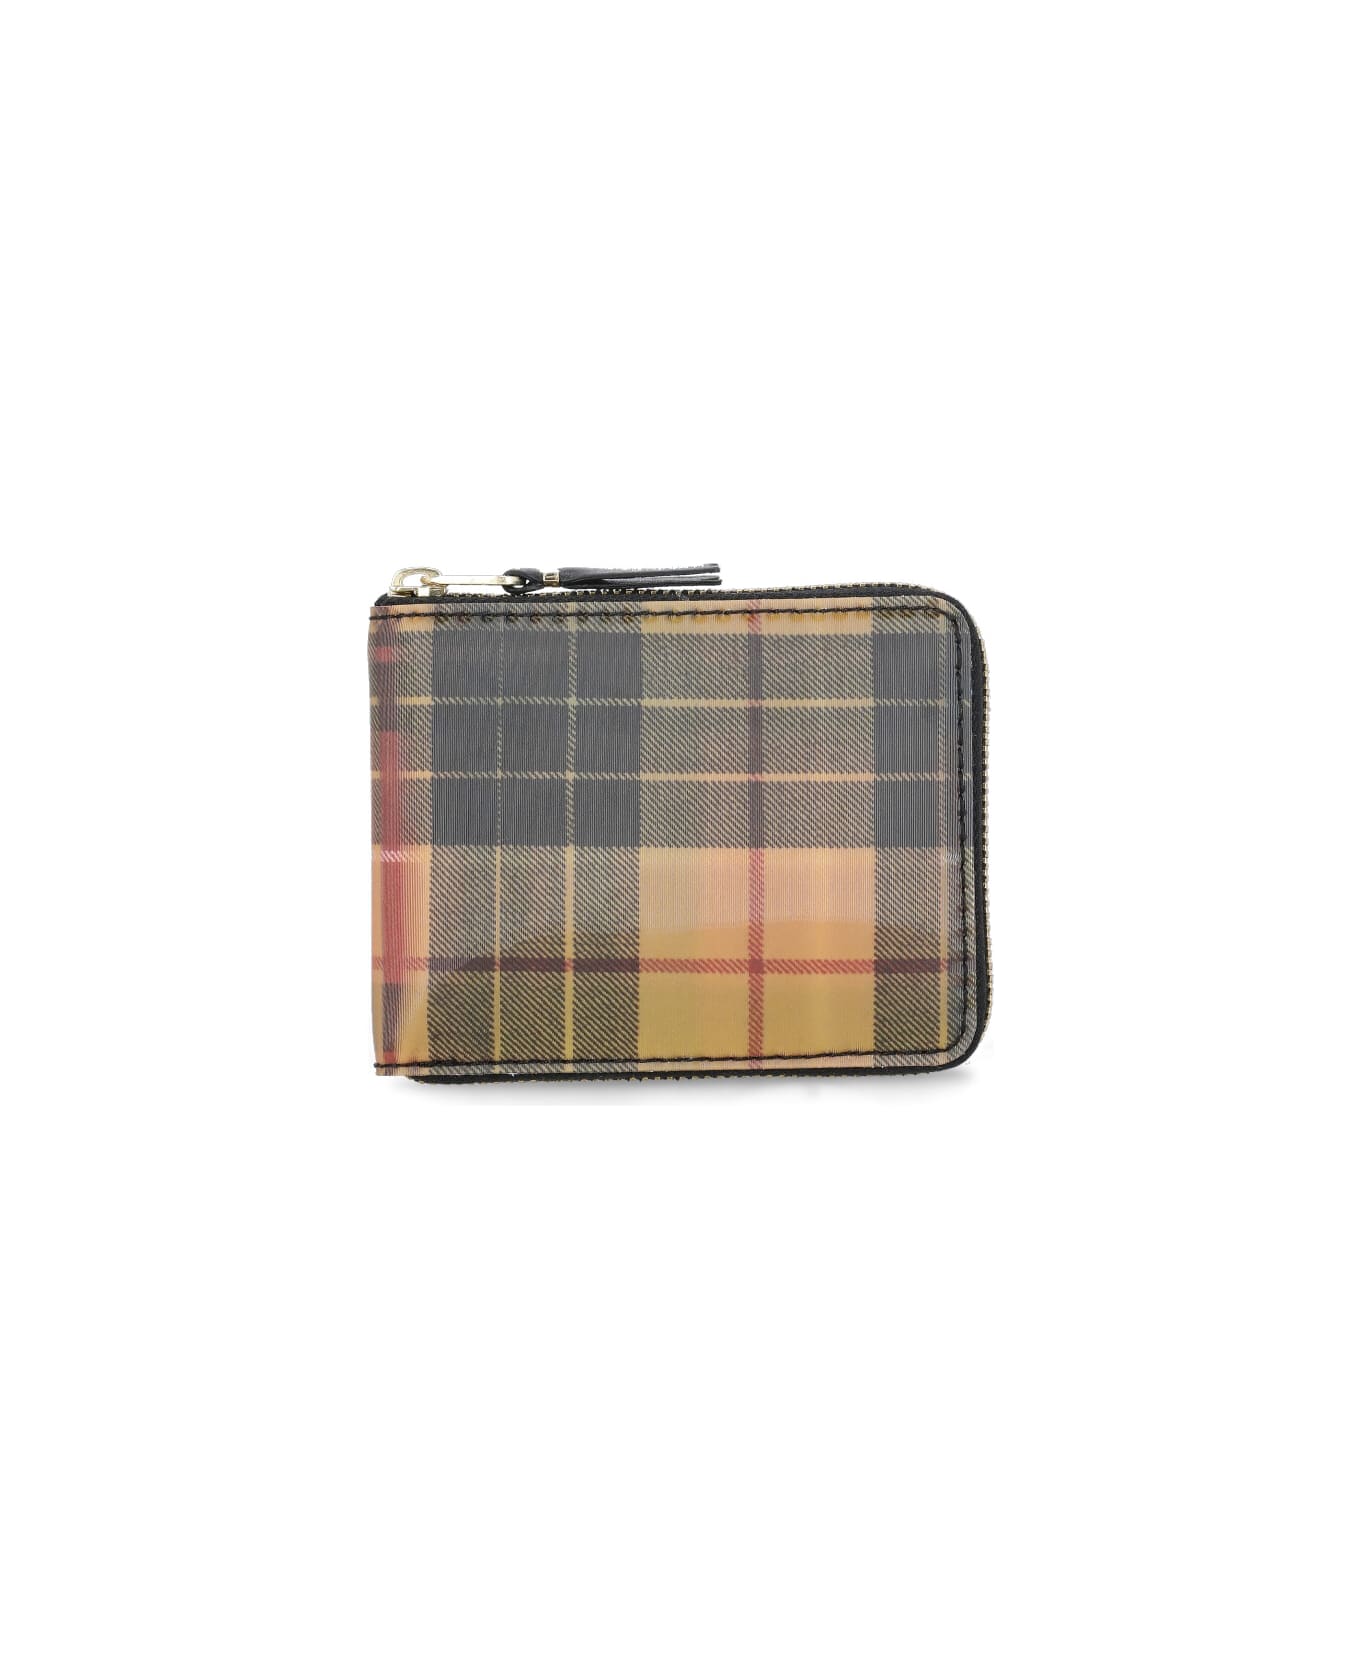 Comme des Garçons Wallet Wallet With A Tartan Pattern Wallet - RED/YELLOW